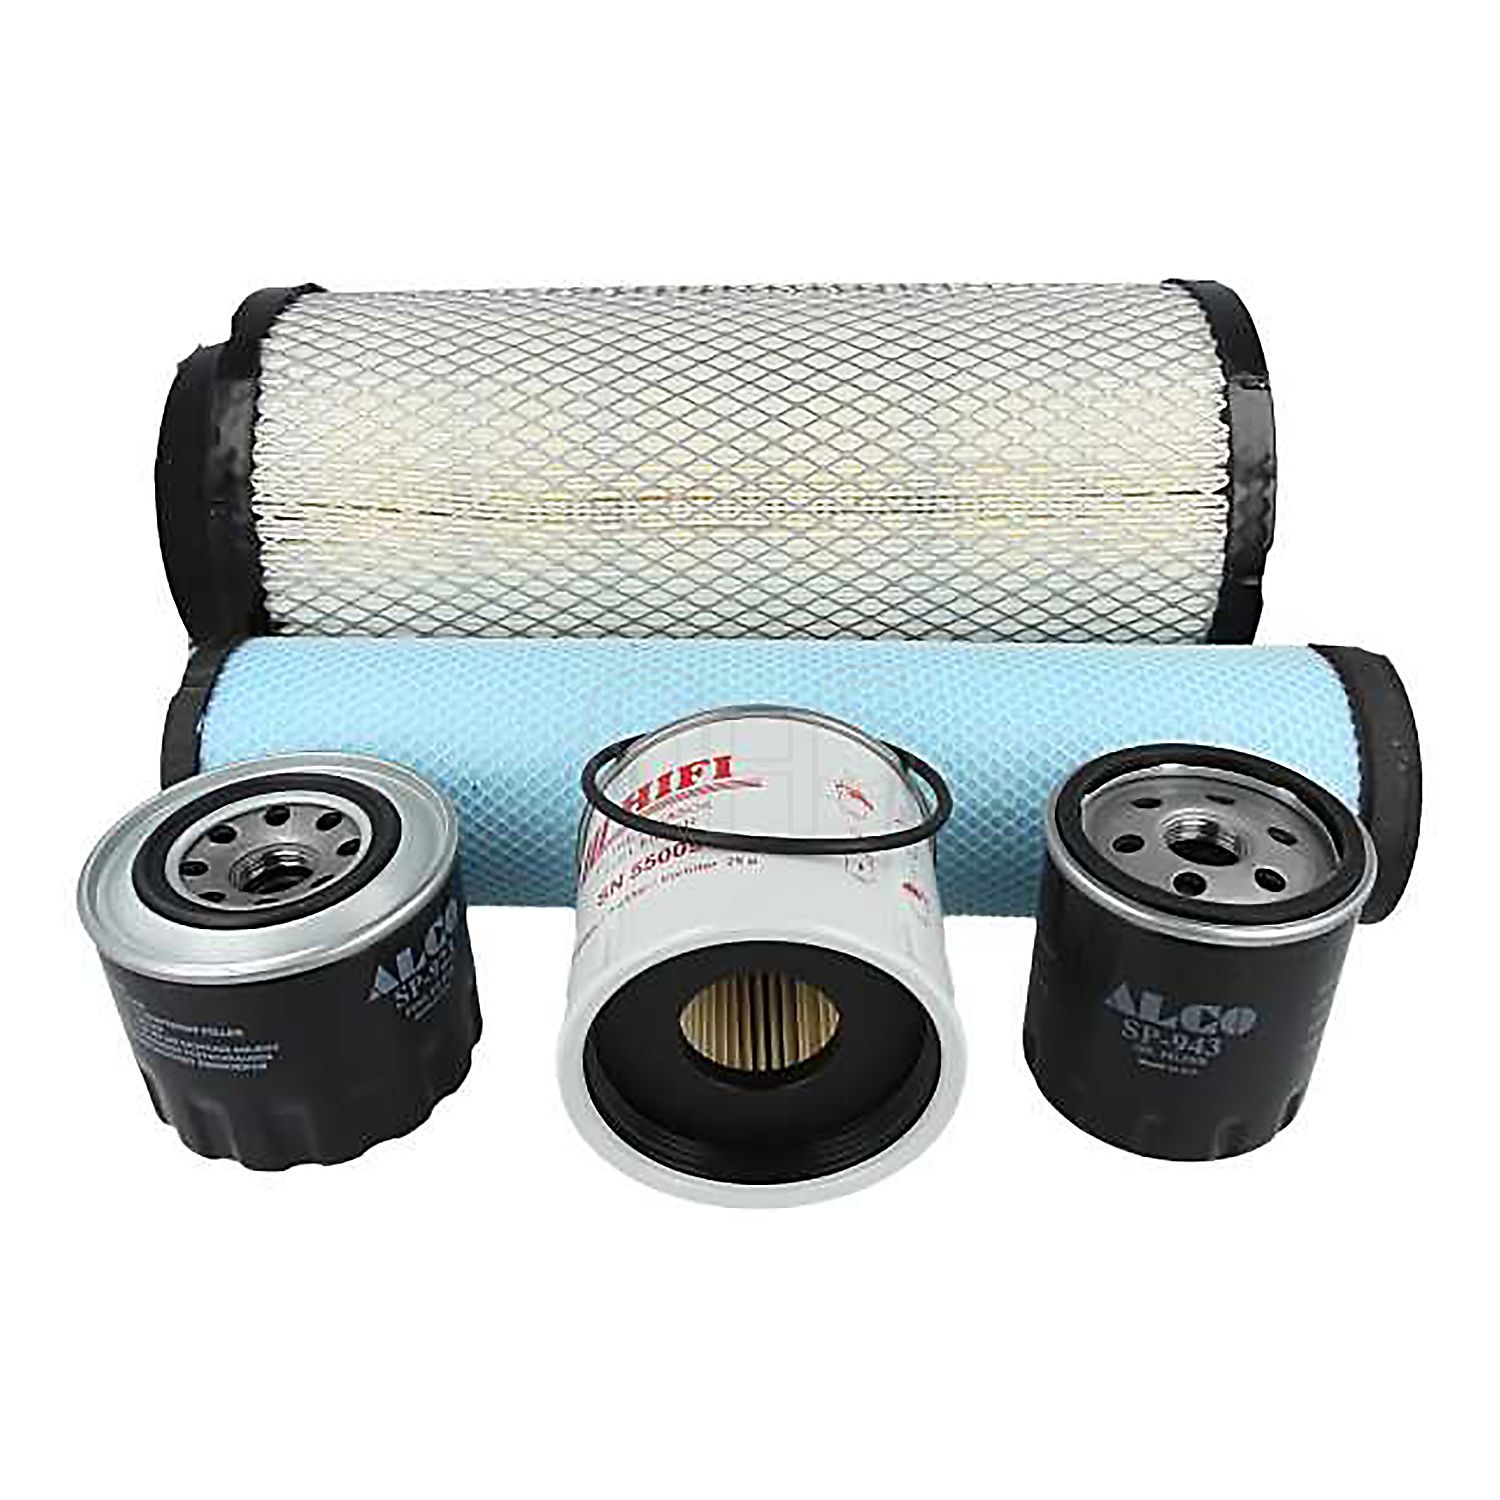 Isuzu Engine Ingersoll-Rand Filter Service Kit Fits Ingersoll rand 7/41 